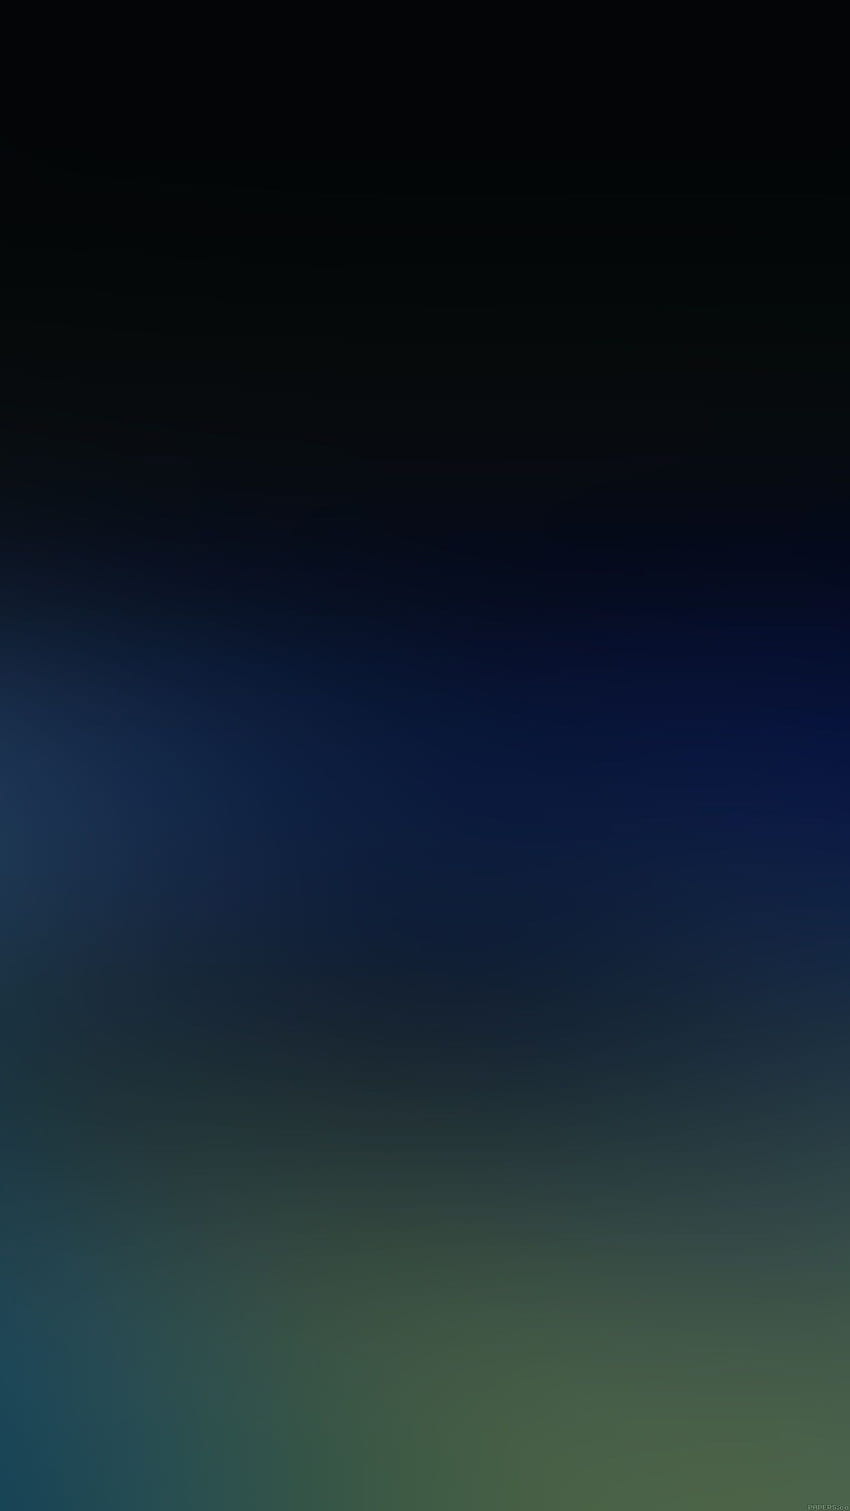 Iphone Black Blur s, desenfoque iphone fondo de pantalla del teléfono